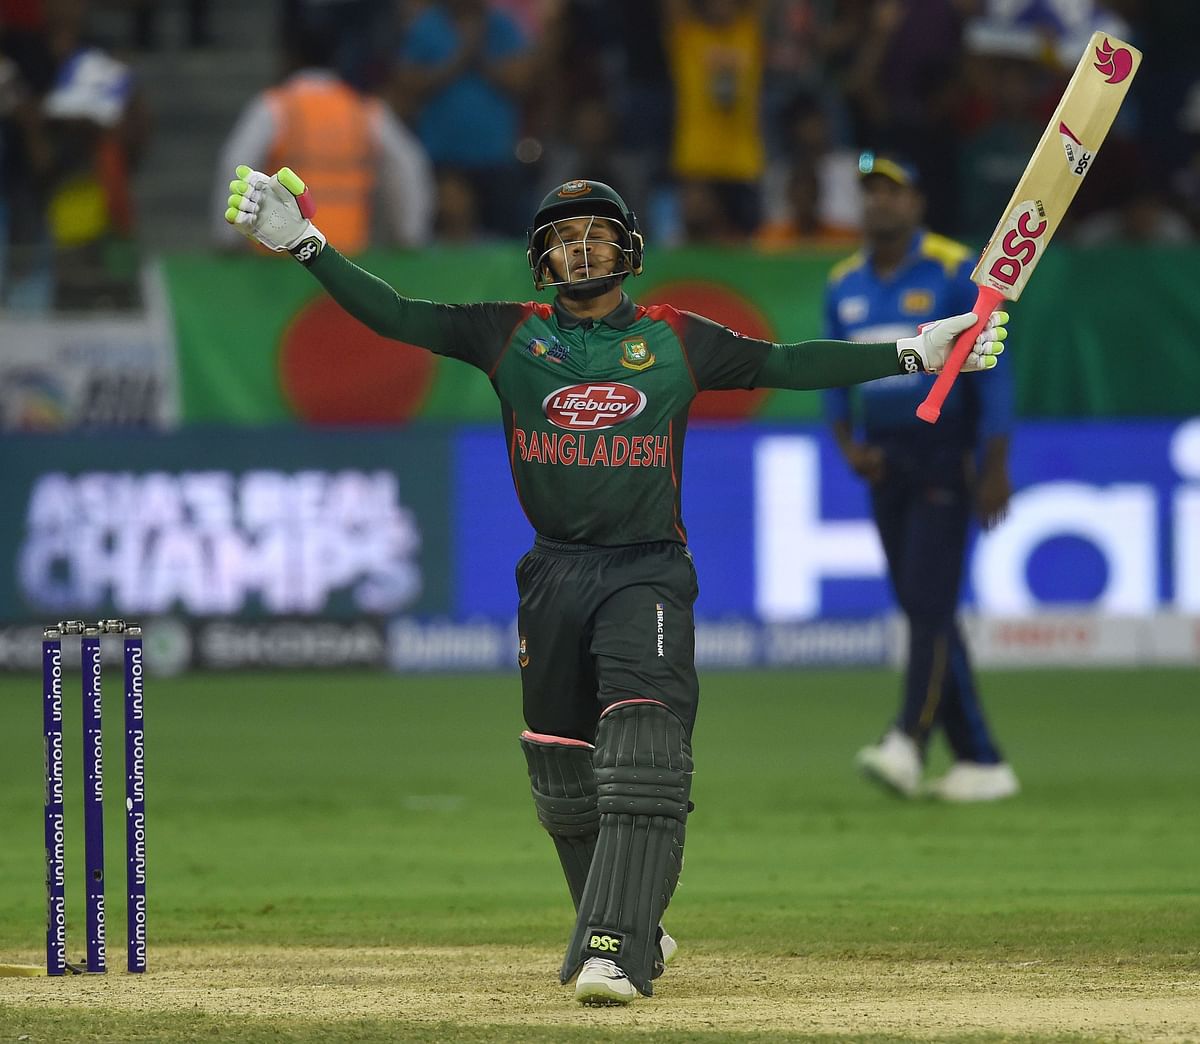 Mushfiqur Rahim celebrates after scoring 100 runs during the one day international (ODI) Asia Cup cricket match between Bangladesh and Sri Lanka at the Dubai International Cricket Stadium in Dubai on 15 September, 2018. Photo: AFP